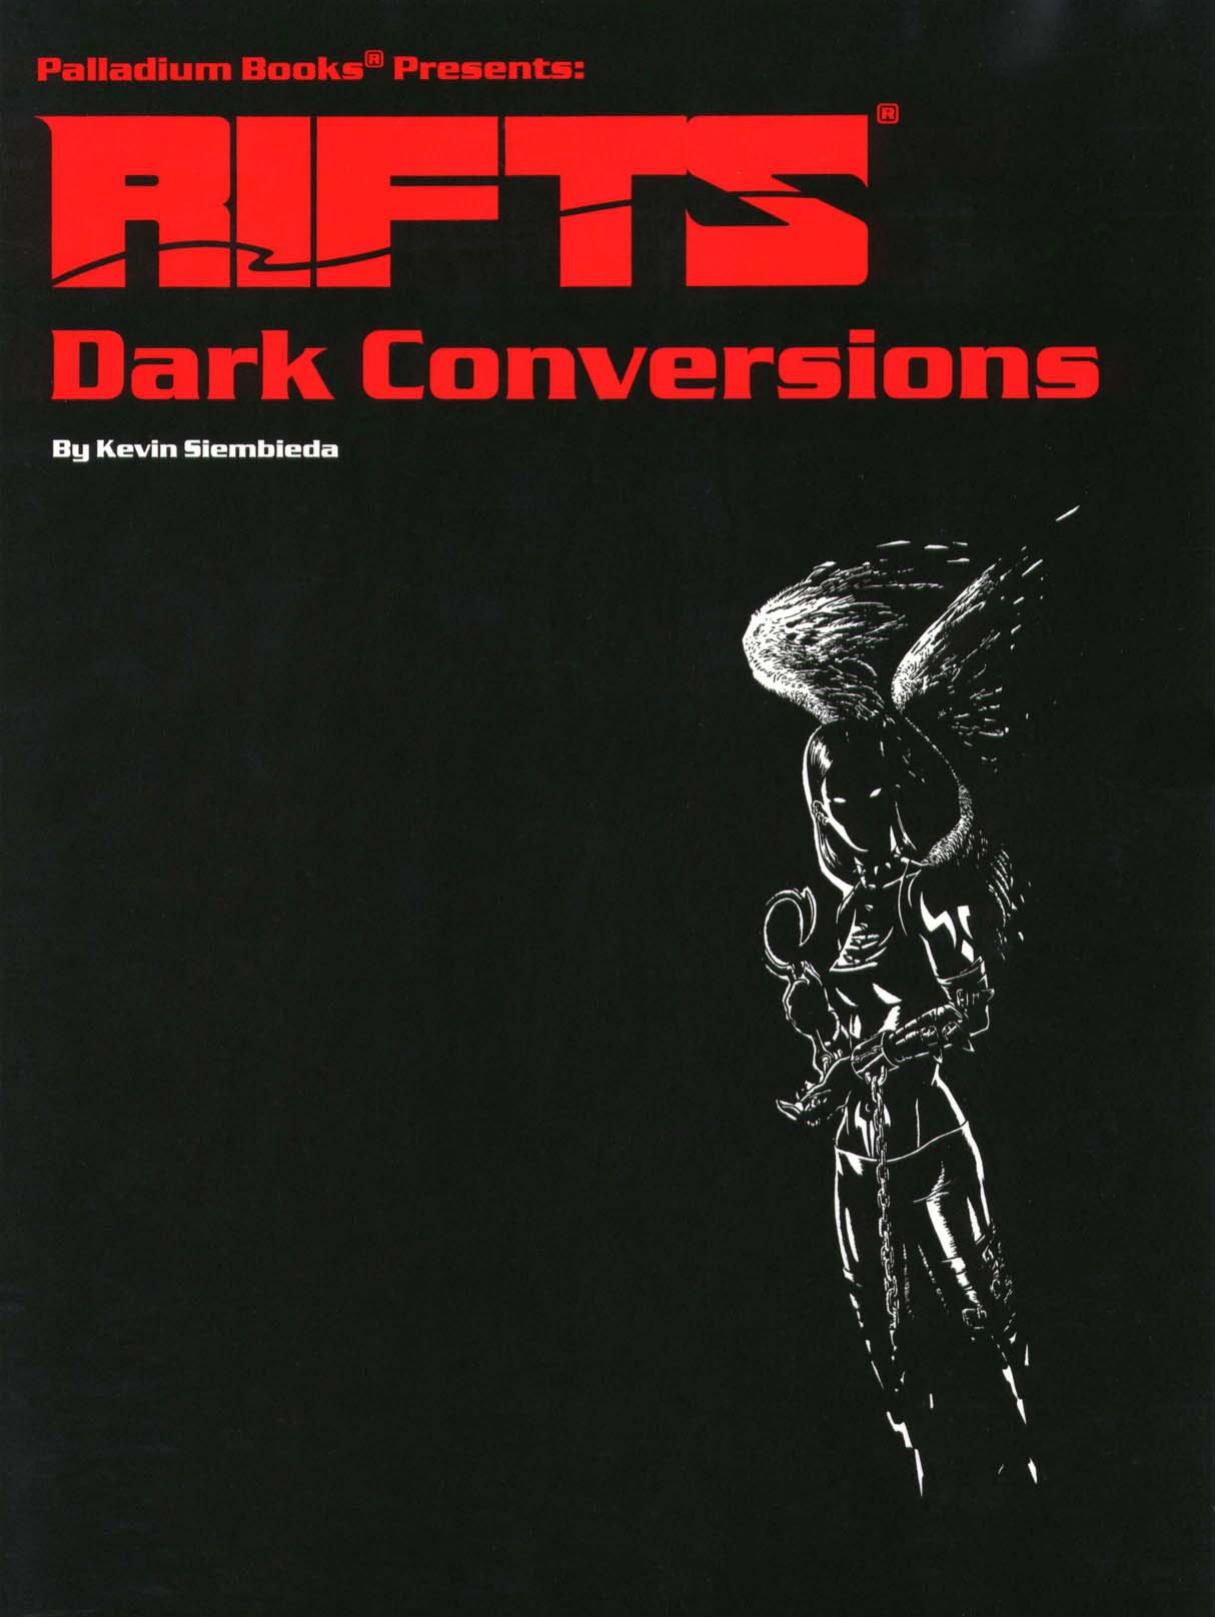 Dark Conversions